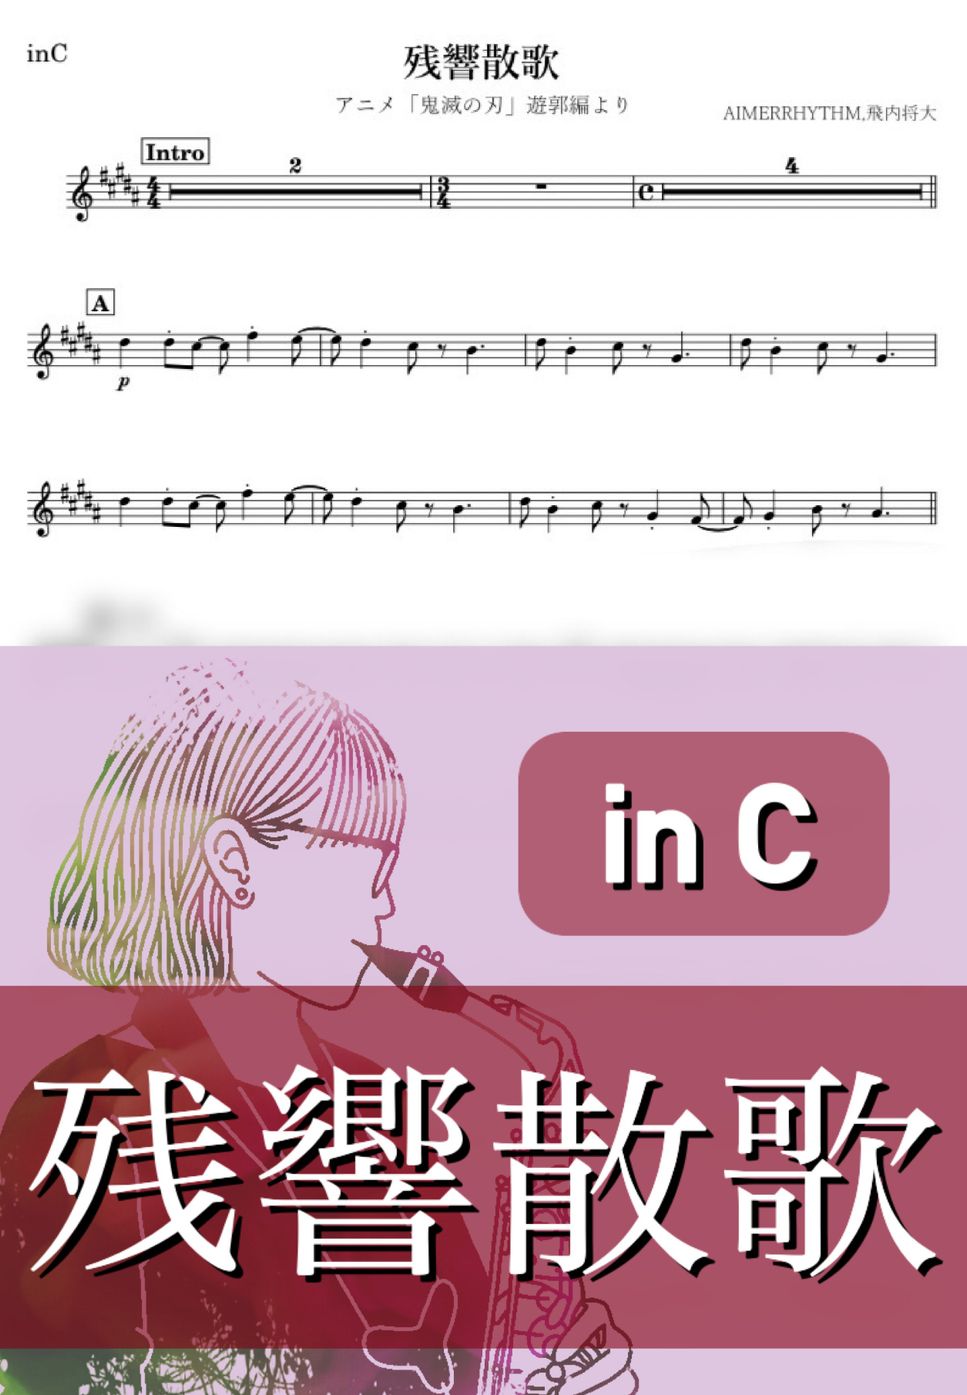 Aimer - 残響散歌 (C) by kanamusic